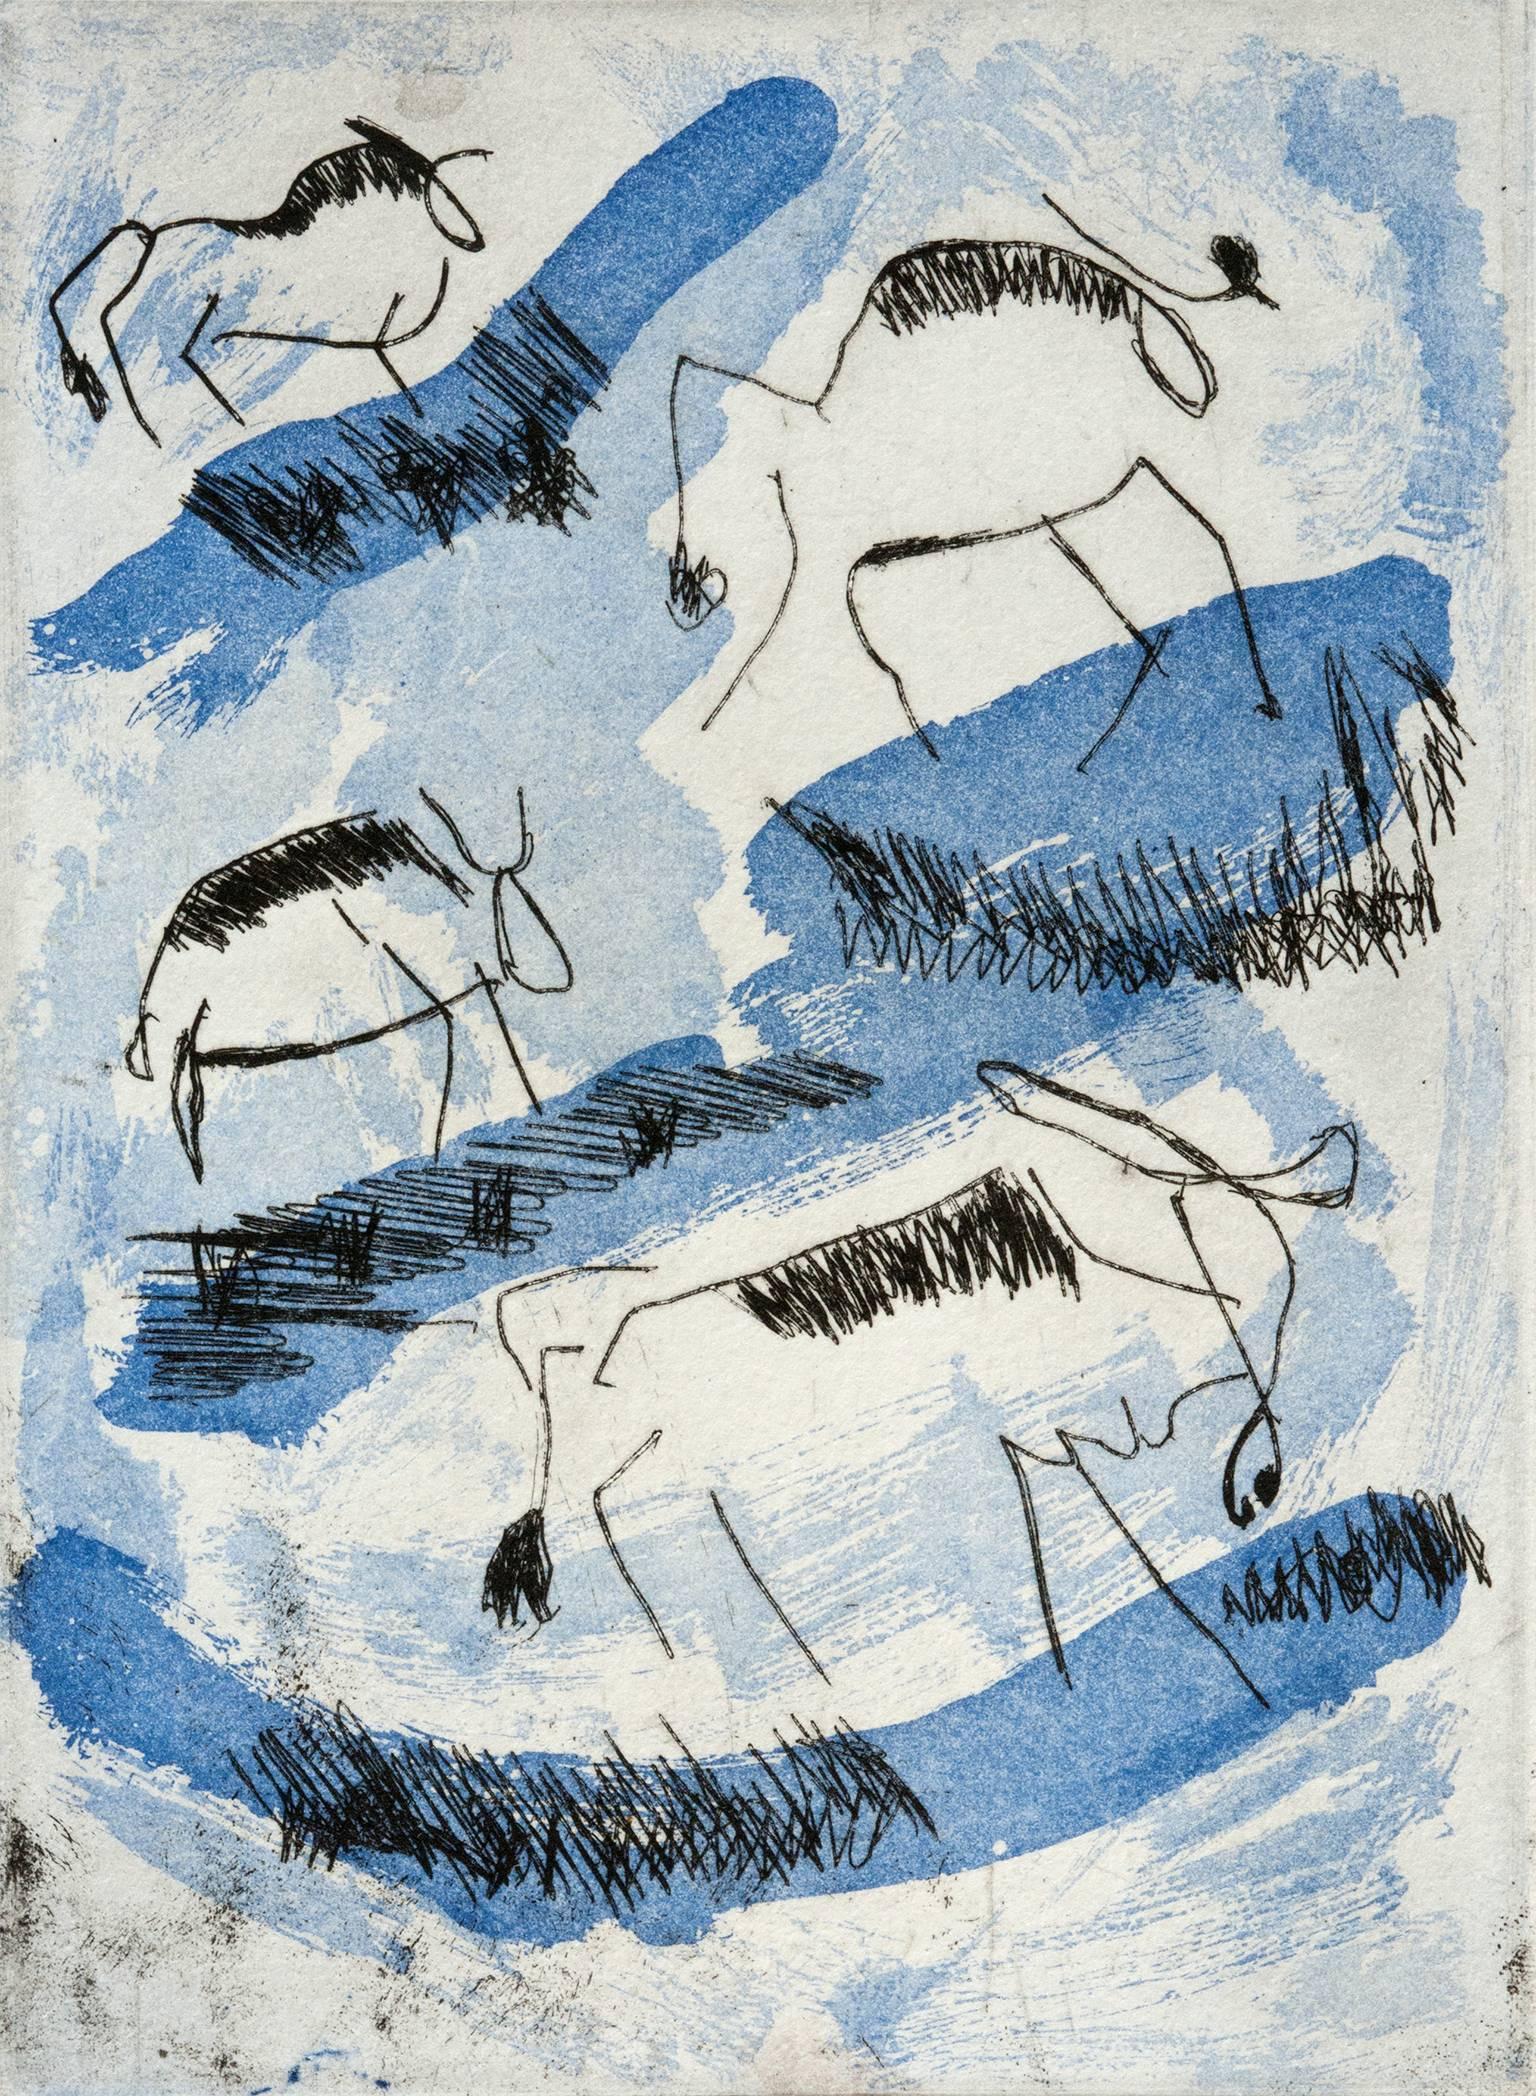 David Marell Animal Print - Wildebeast Migration, African wildlife, safari, etching, aquatint, blue, black.